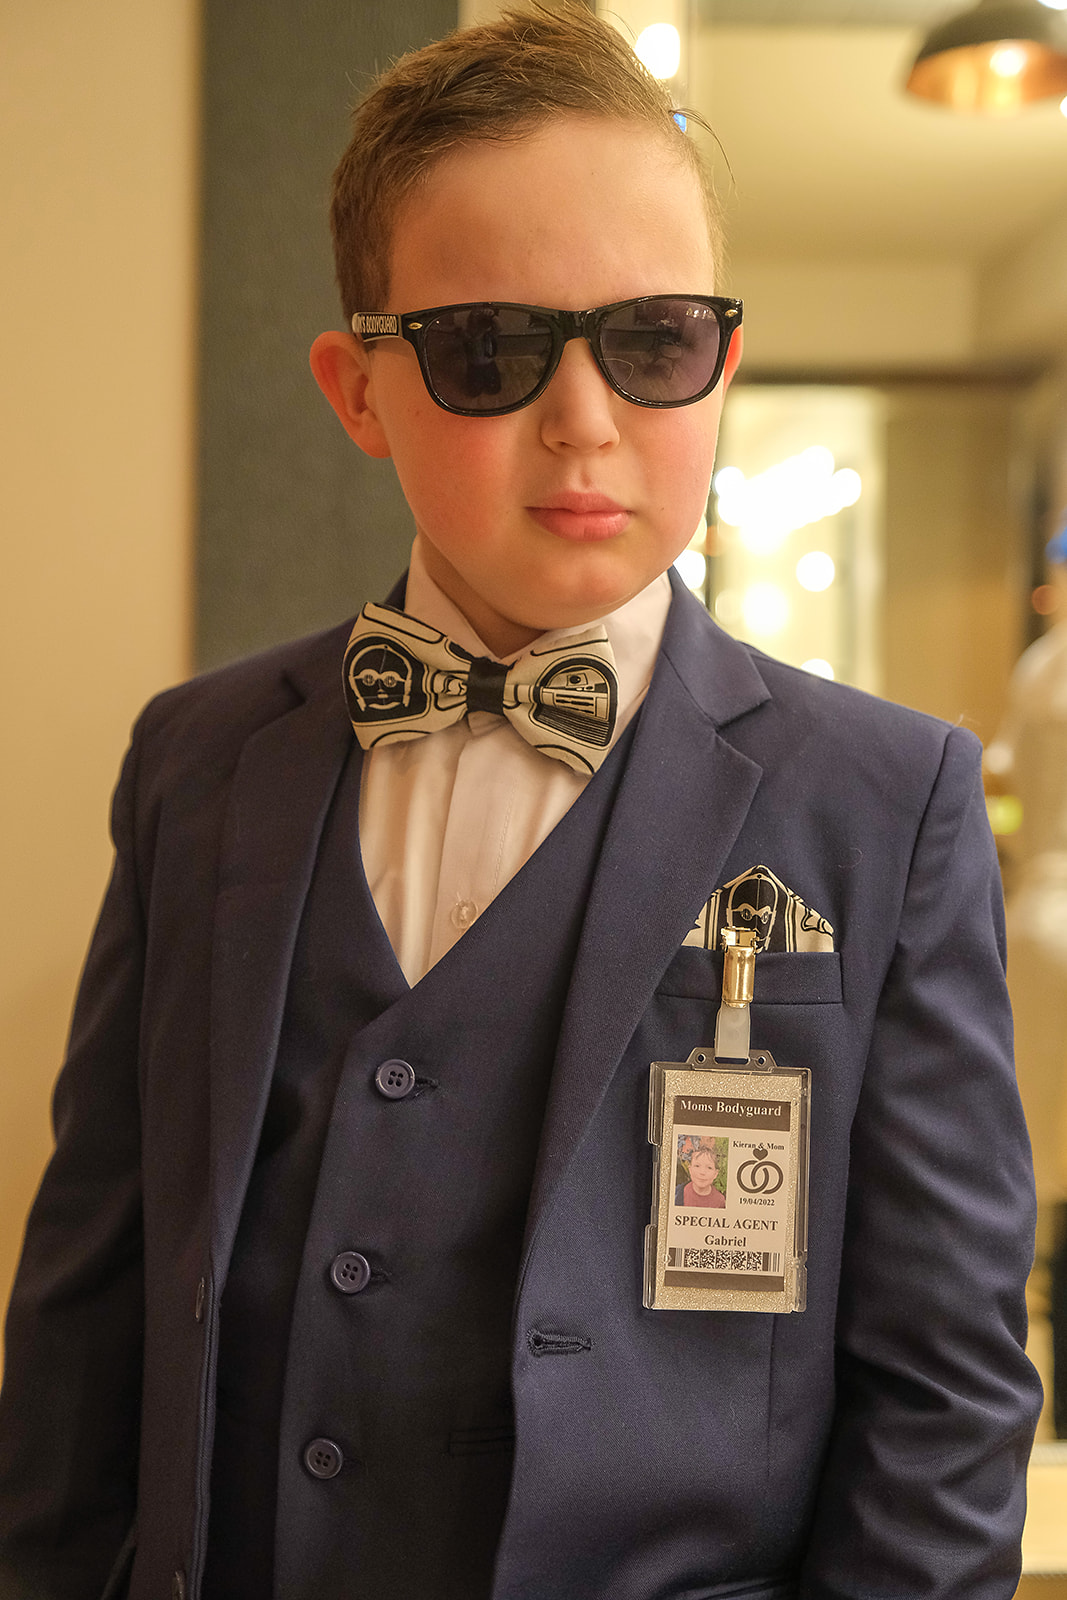 secret agent costume for son of bride - fun wedding ideas for kids